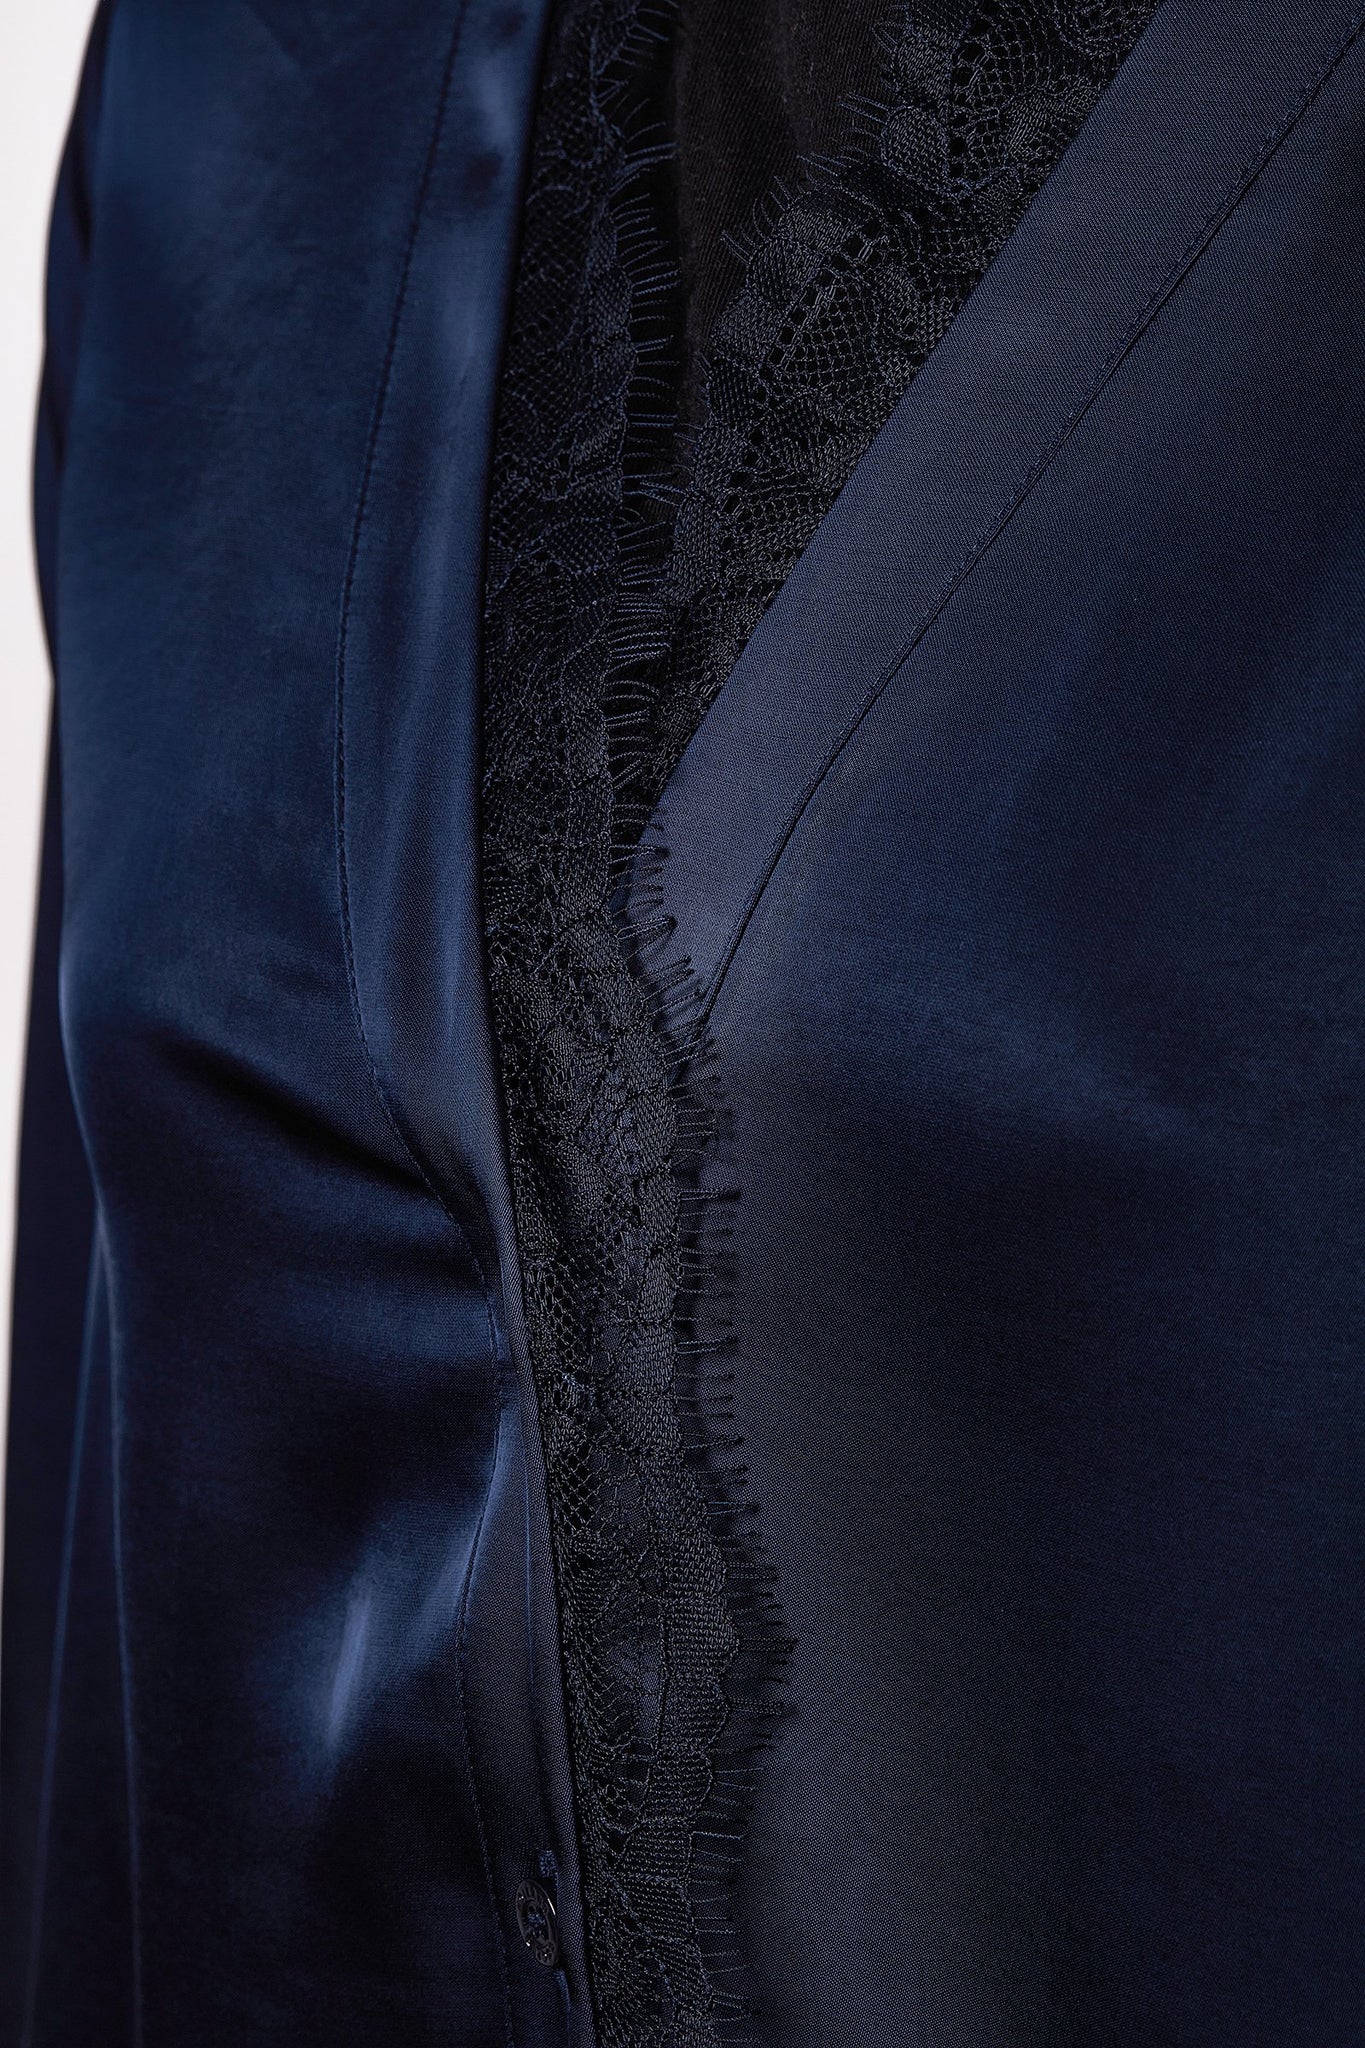 lace hem detail on womens blue long sleeve silk v neck blouse with black lace hem details